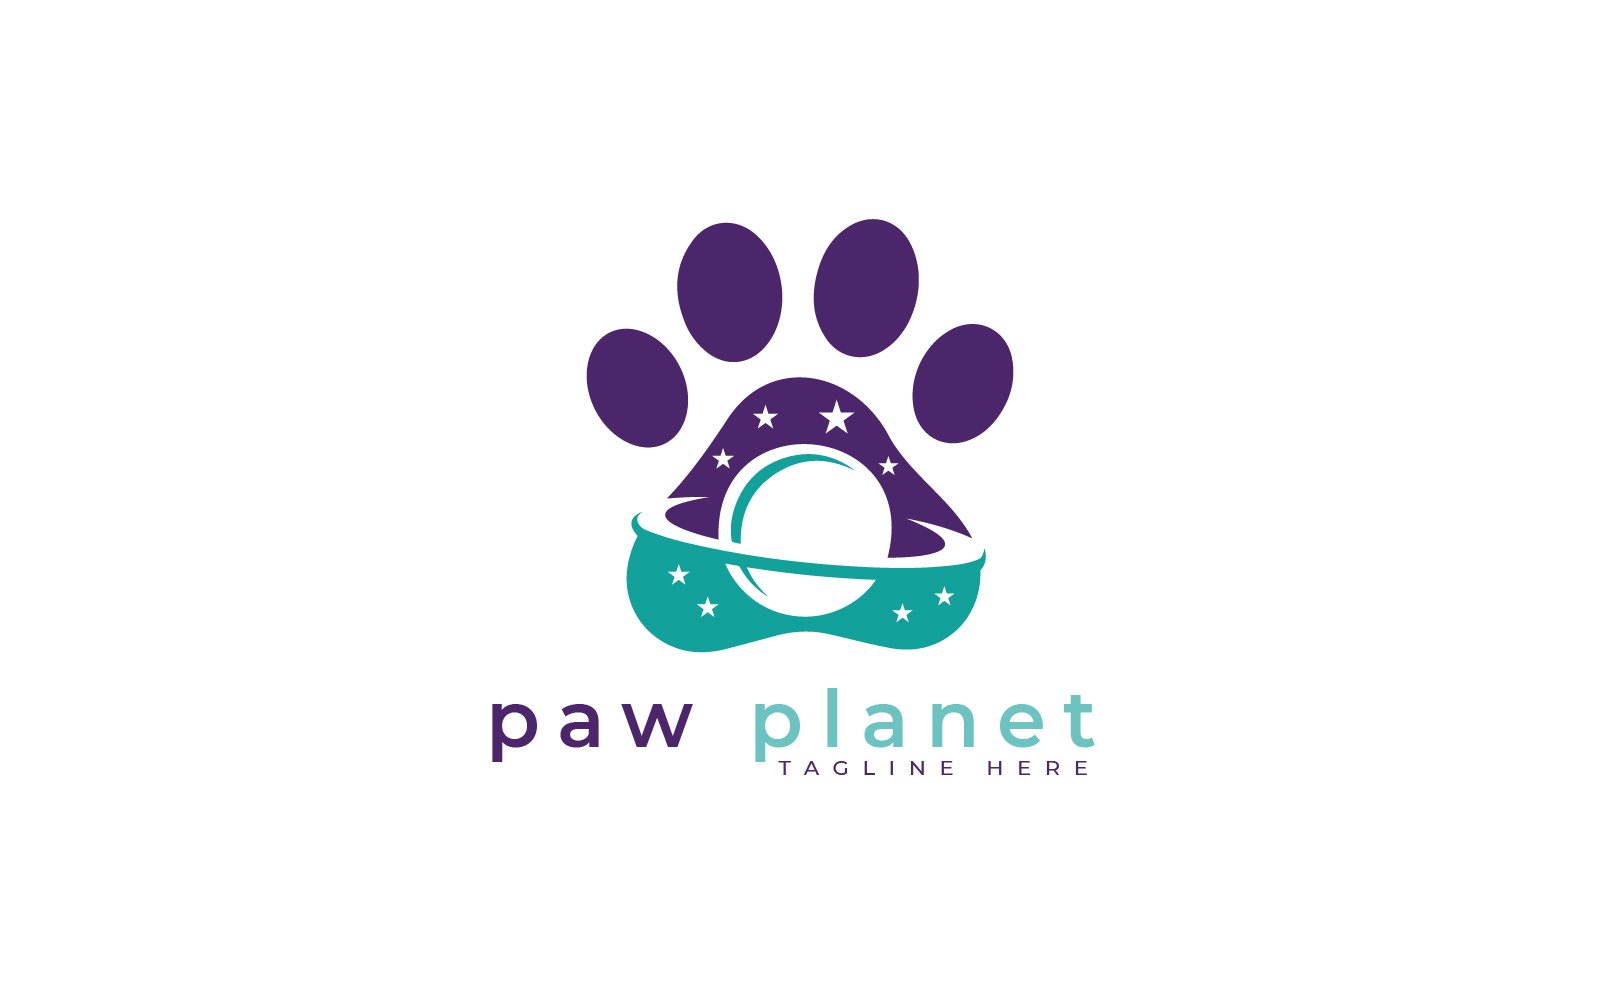 paw planet logo design template